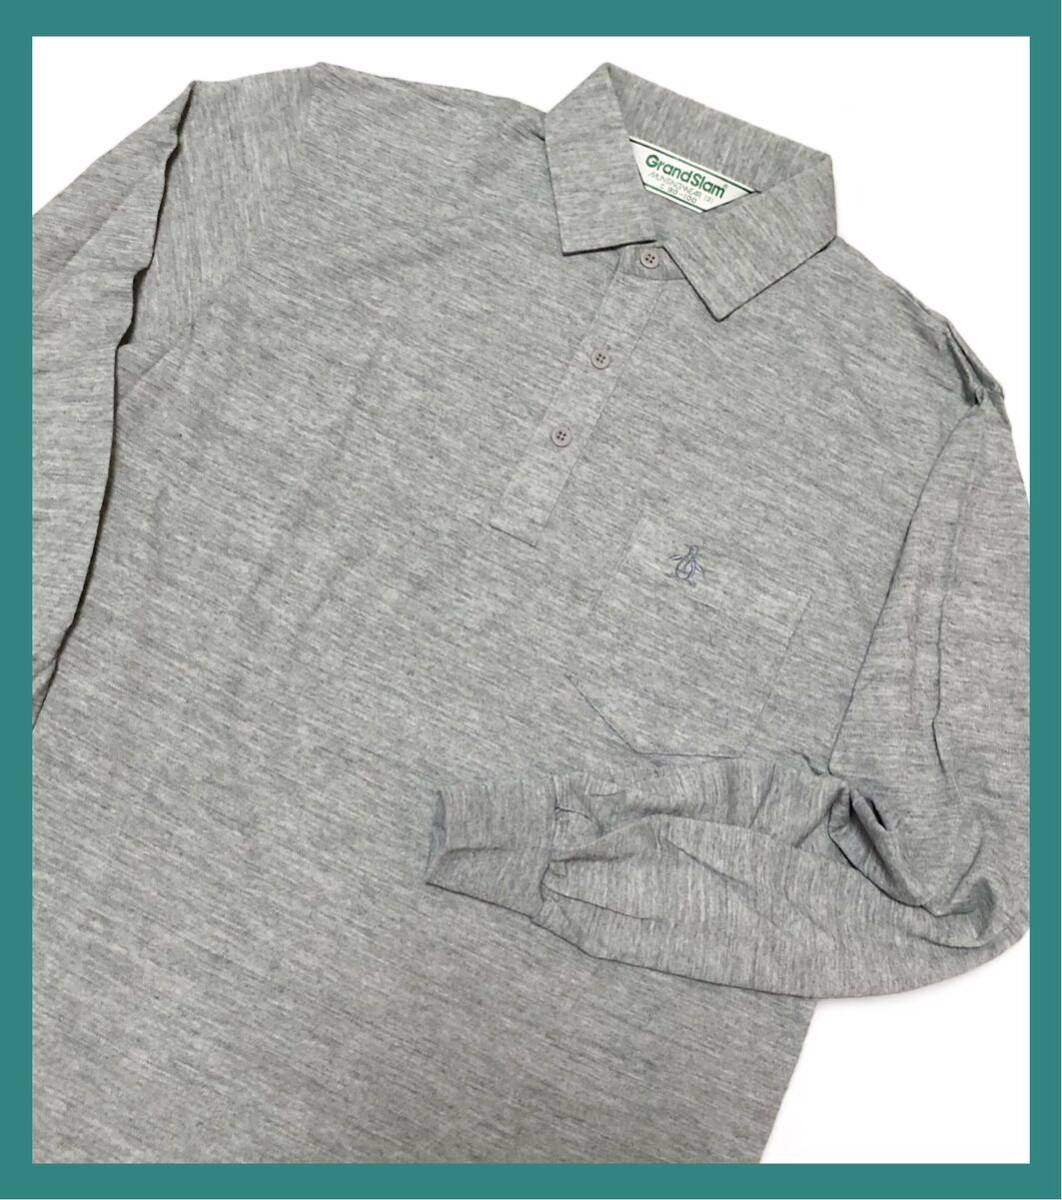 238*Grand Slam Munsingwear Munsingwear wear * penguin embroidery border pattern polo-shirt with long sleeves gray 2